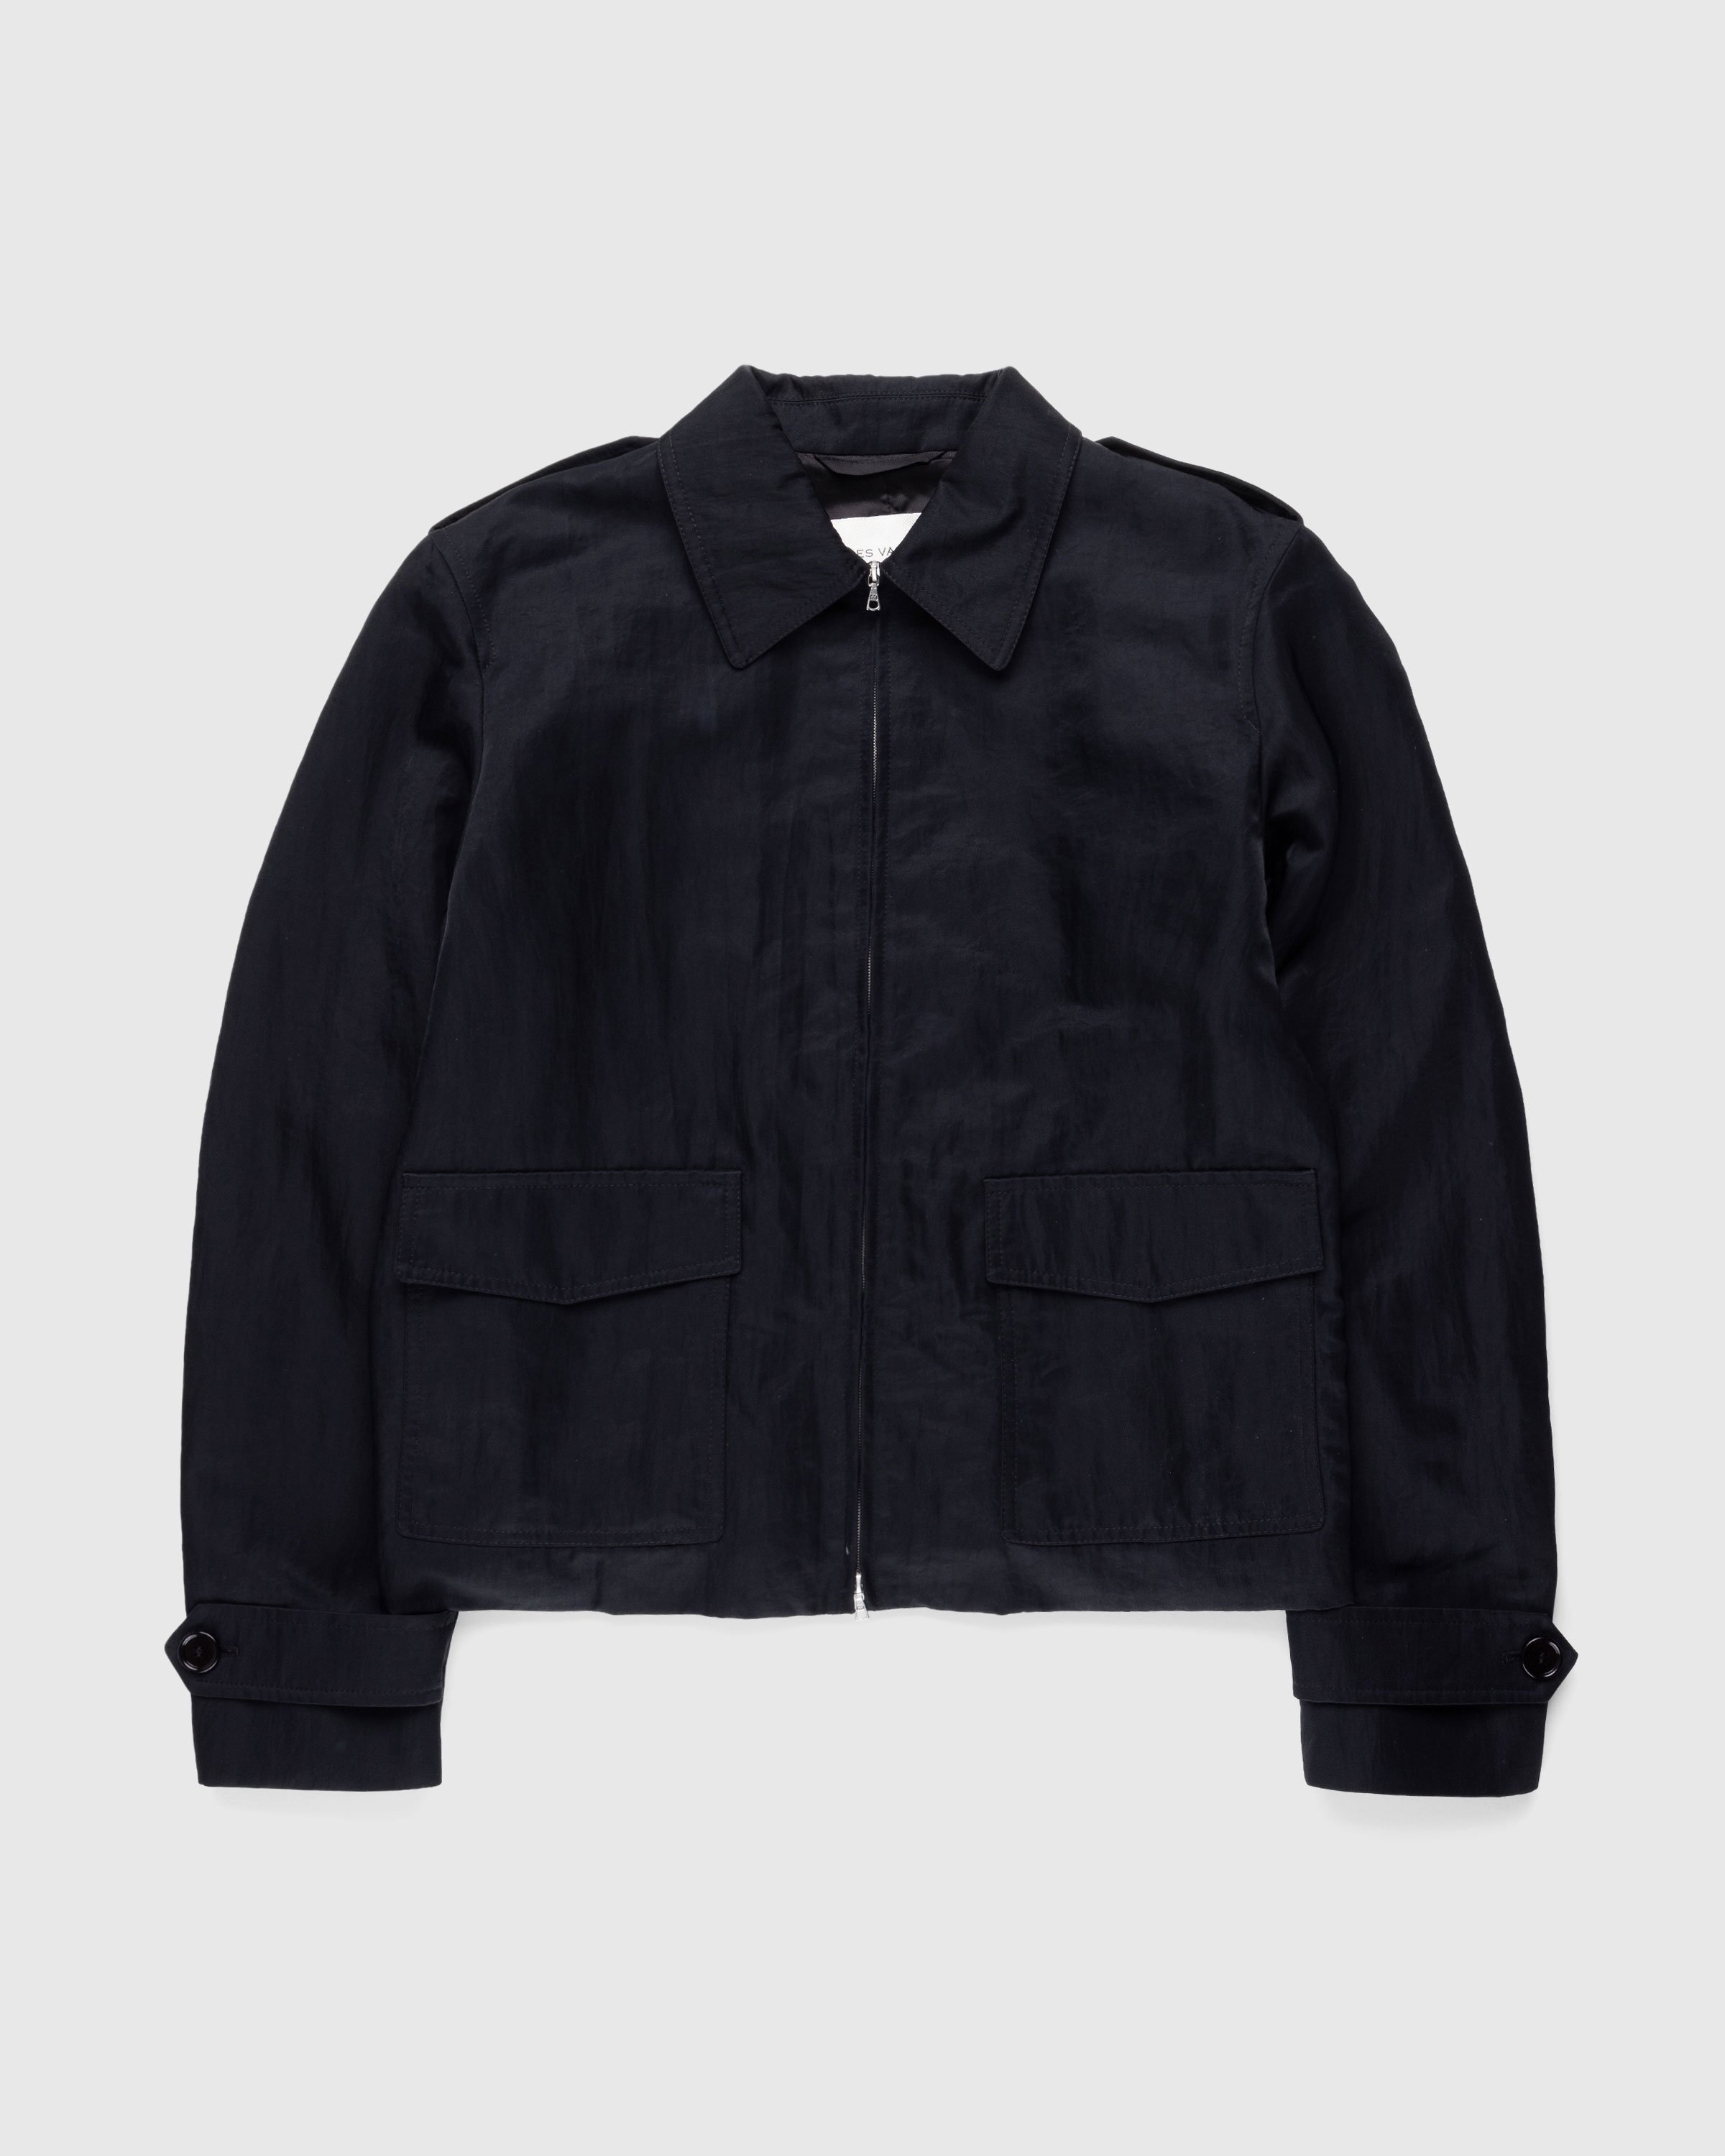 Dries van Noten - Vallow Jacket Black - Clothing - Black - Image 1